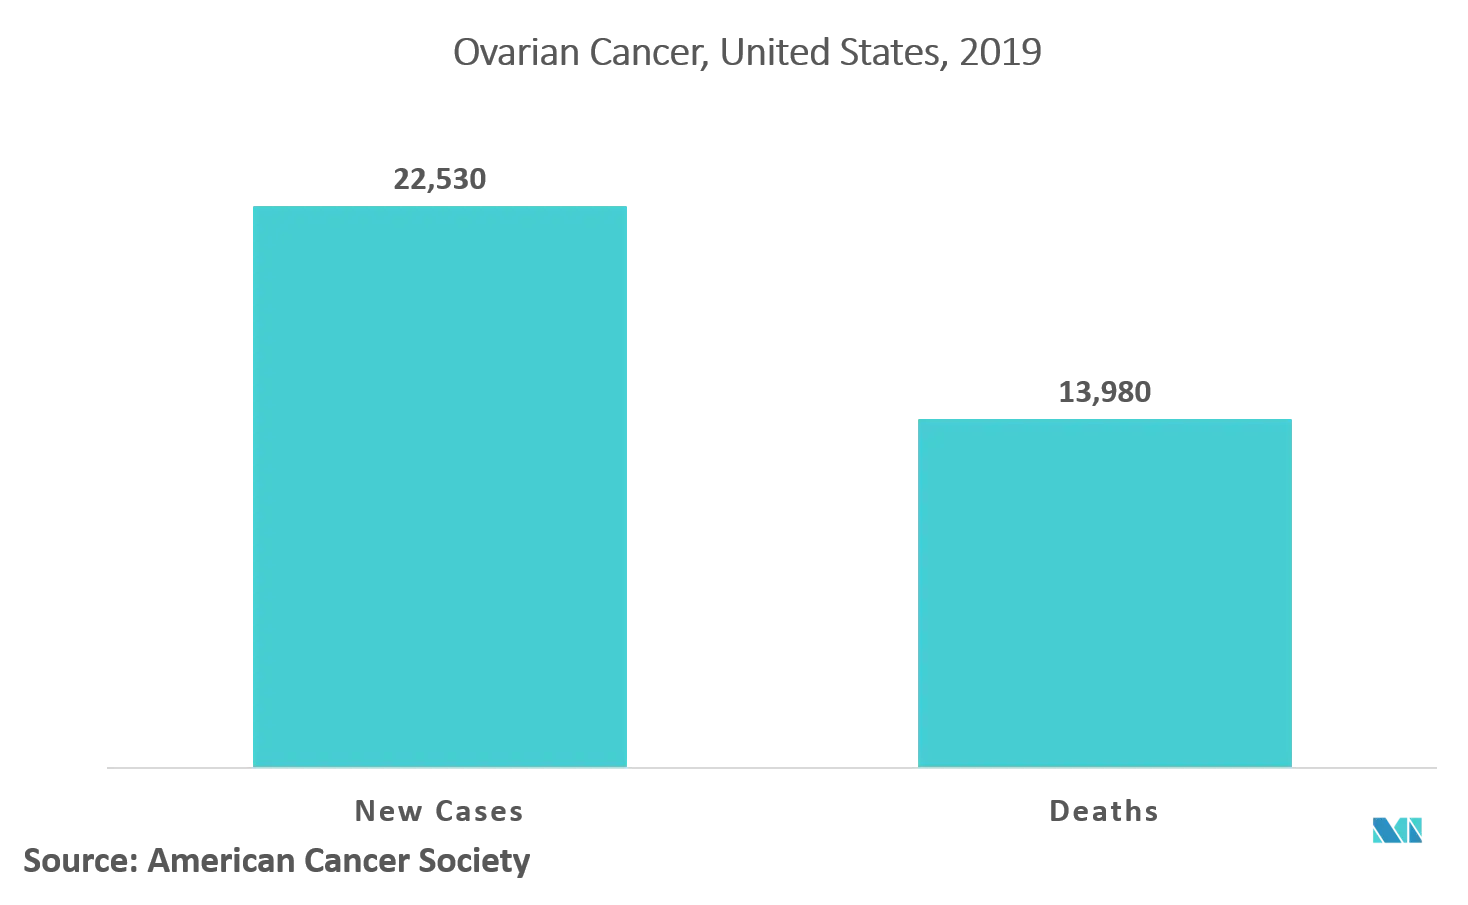 Ovarian Cancer Diagnostics and Therapeutics Market Share